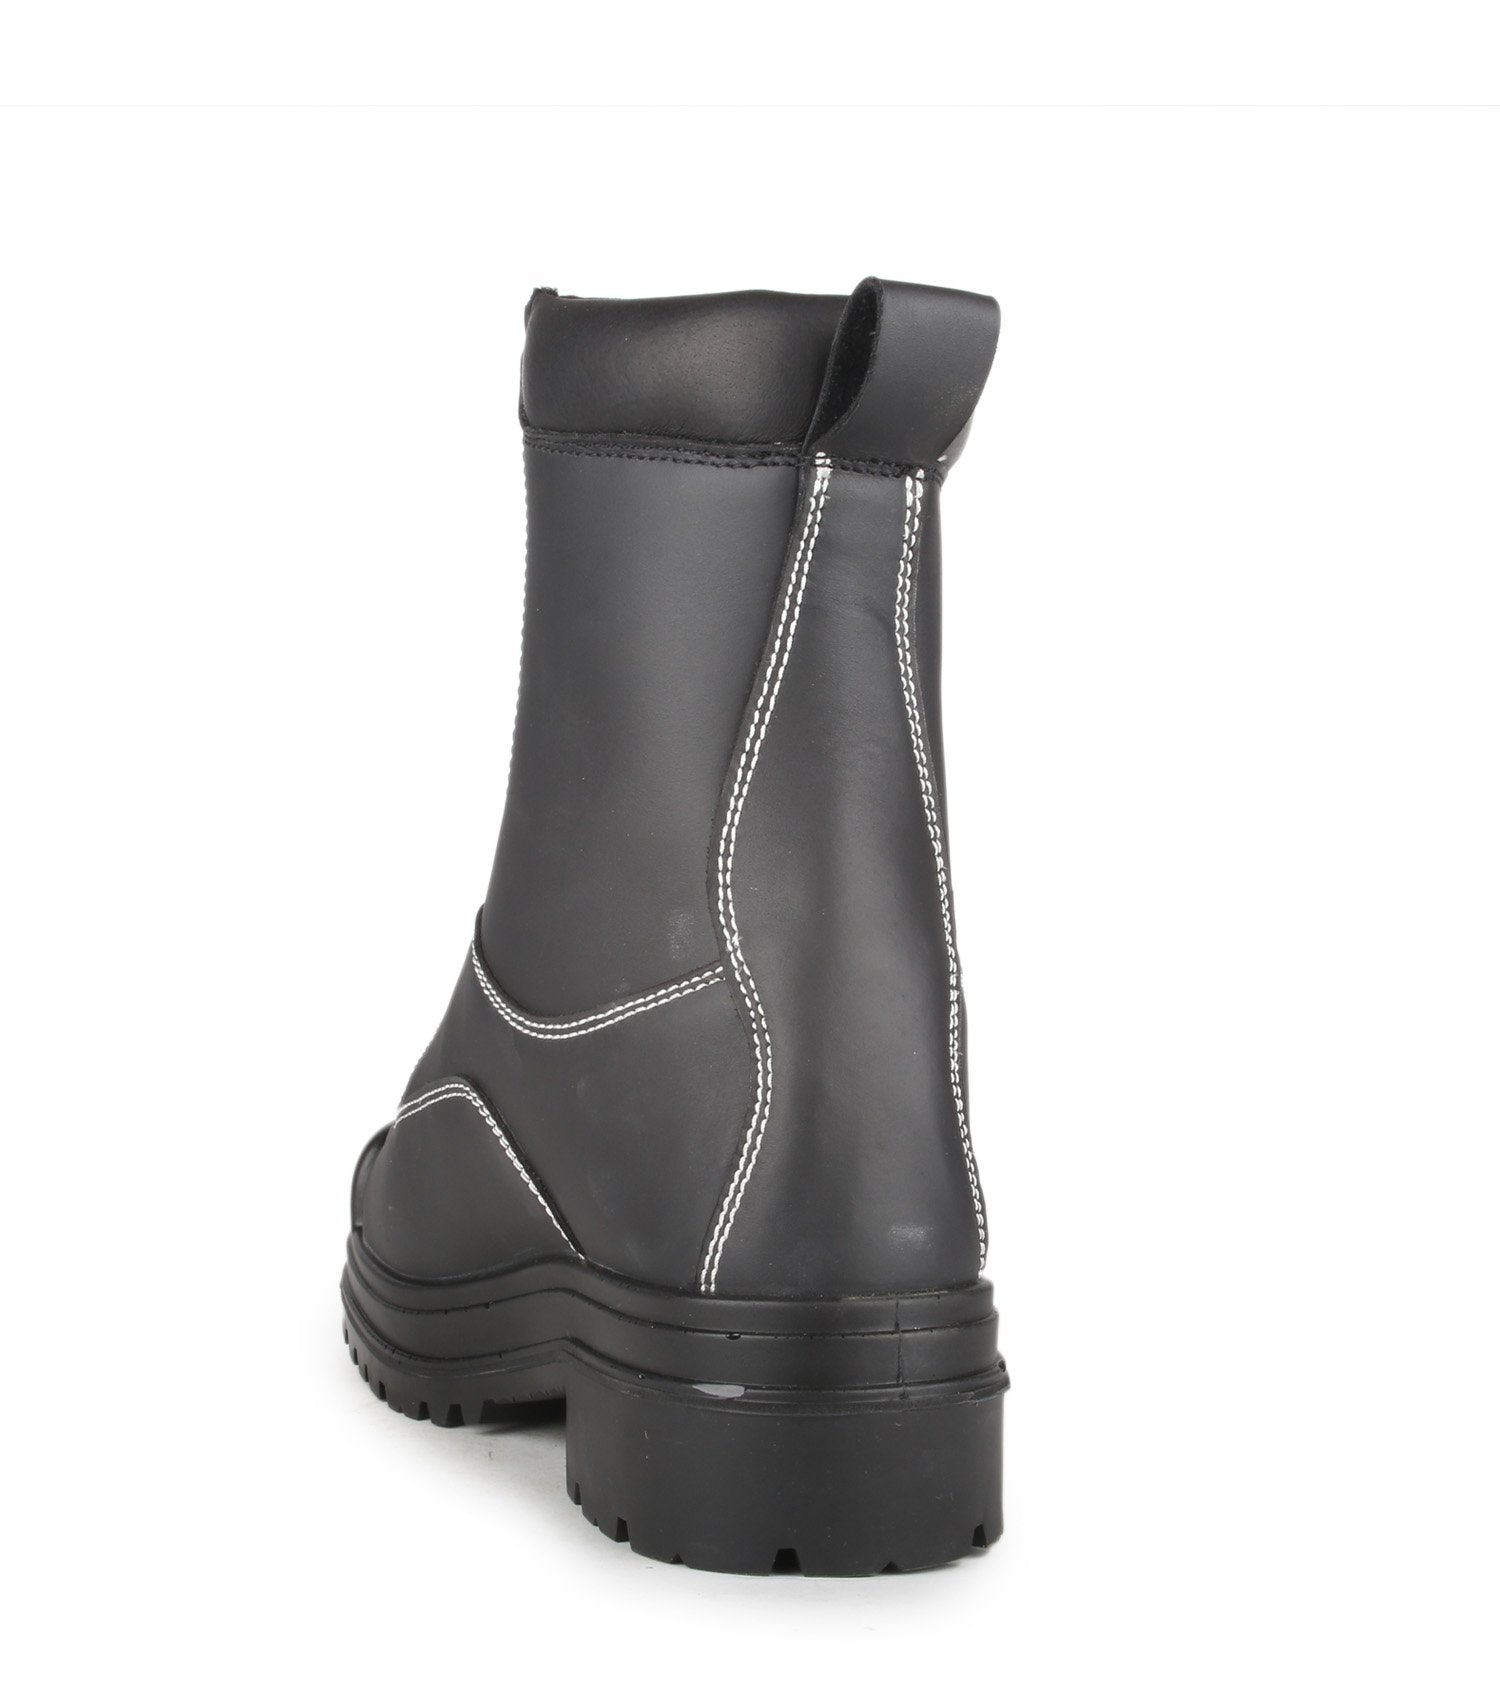 STC Hardrock 10" Internal Metguard Safety Boots | Black | Sizes 6 - 14 Work Boots - Cleanflow